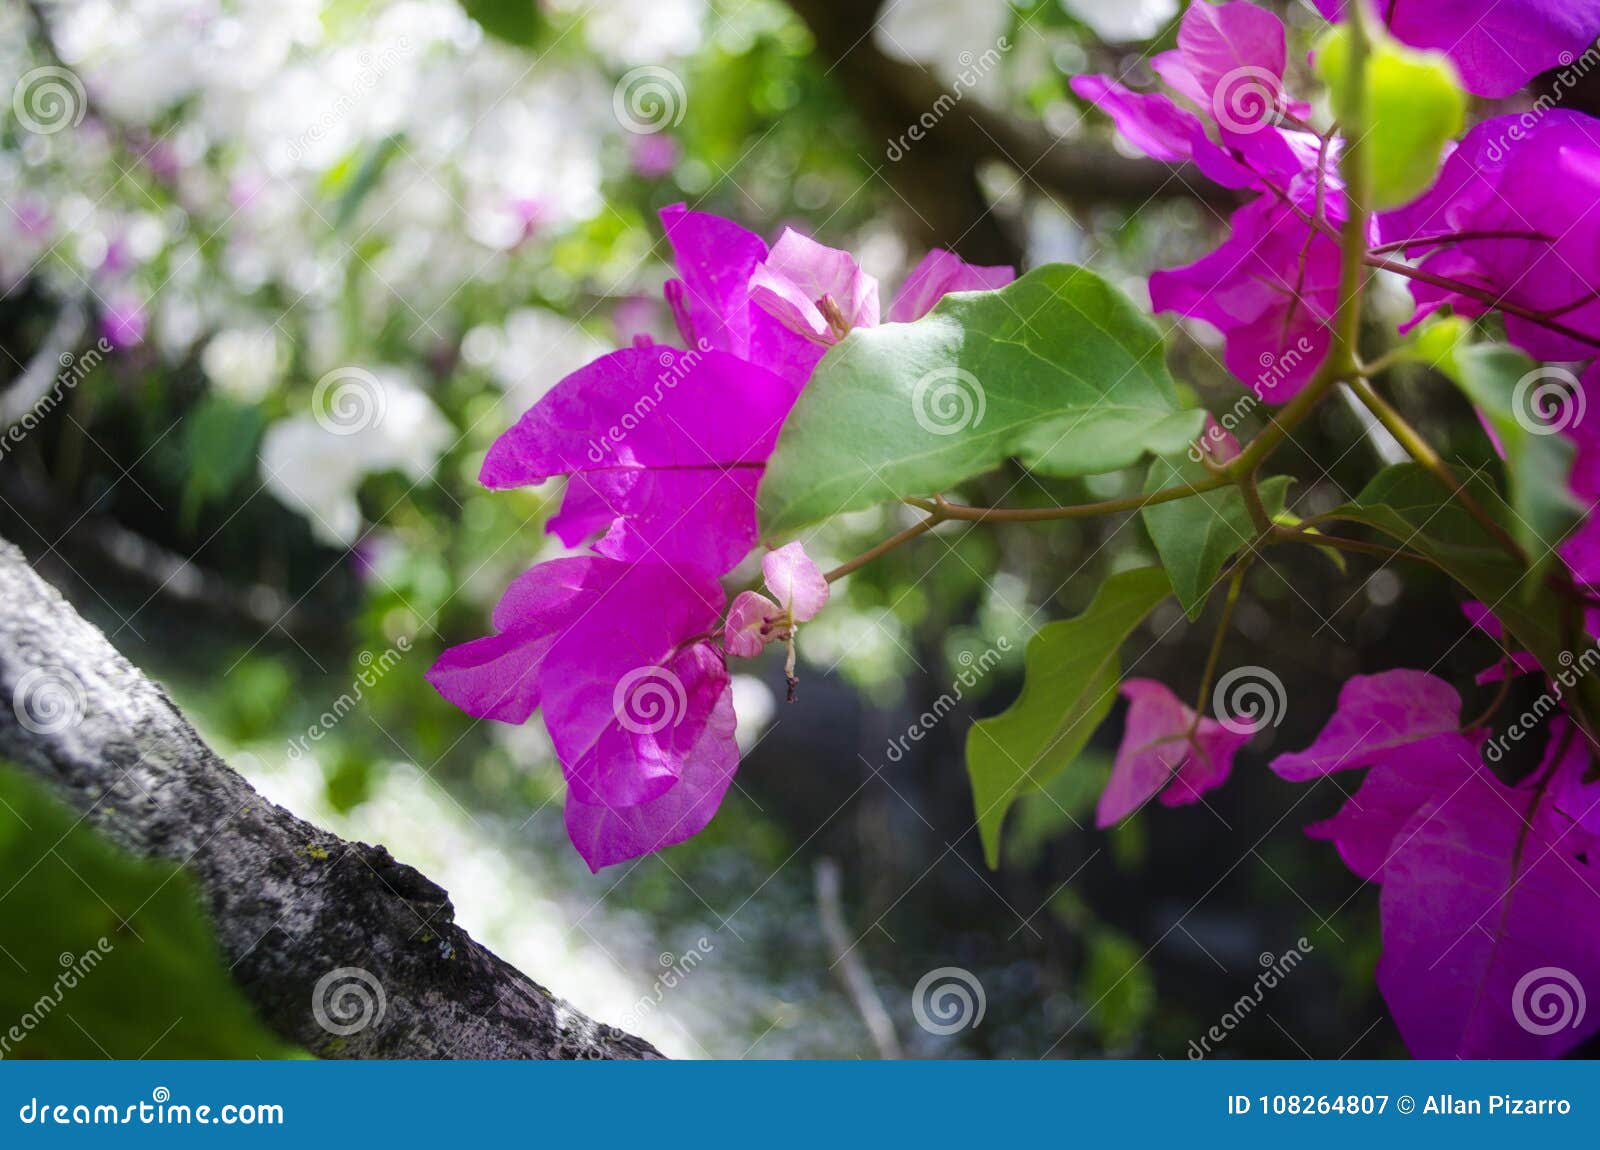 fuchsia flower tree